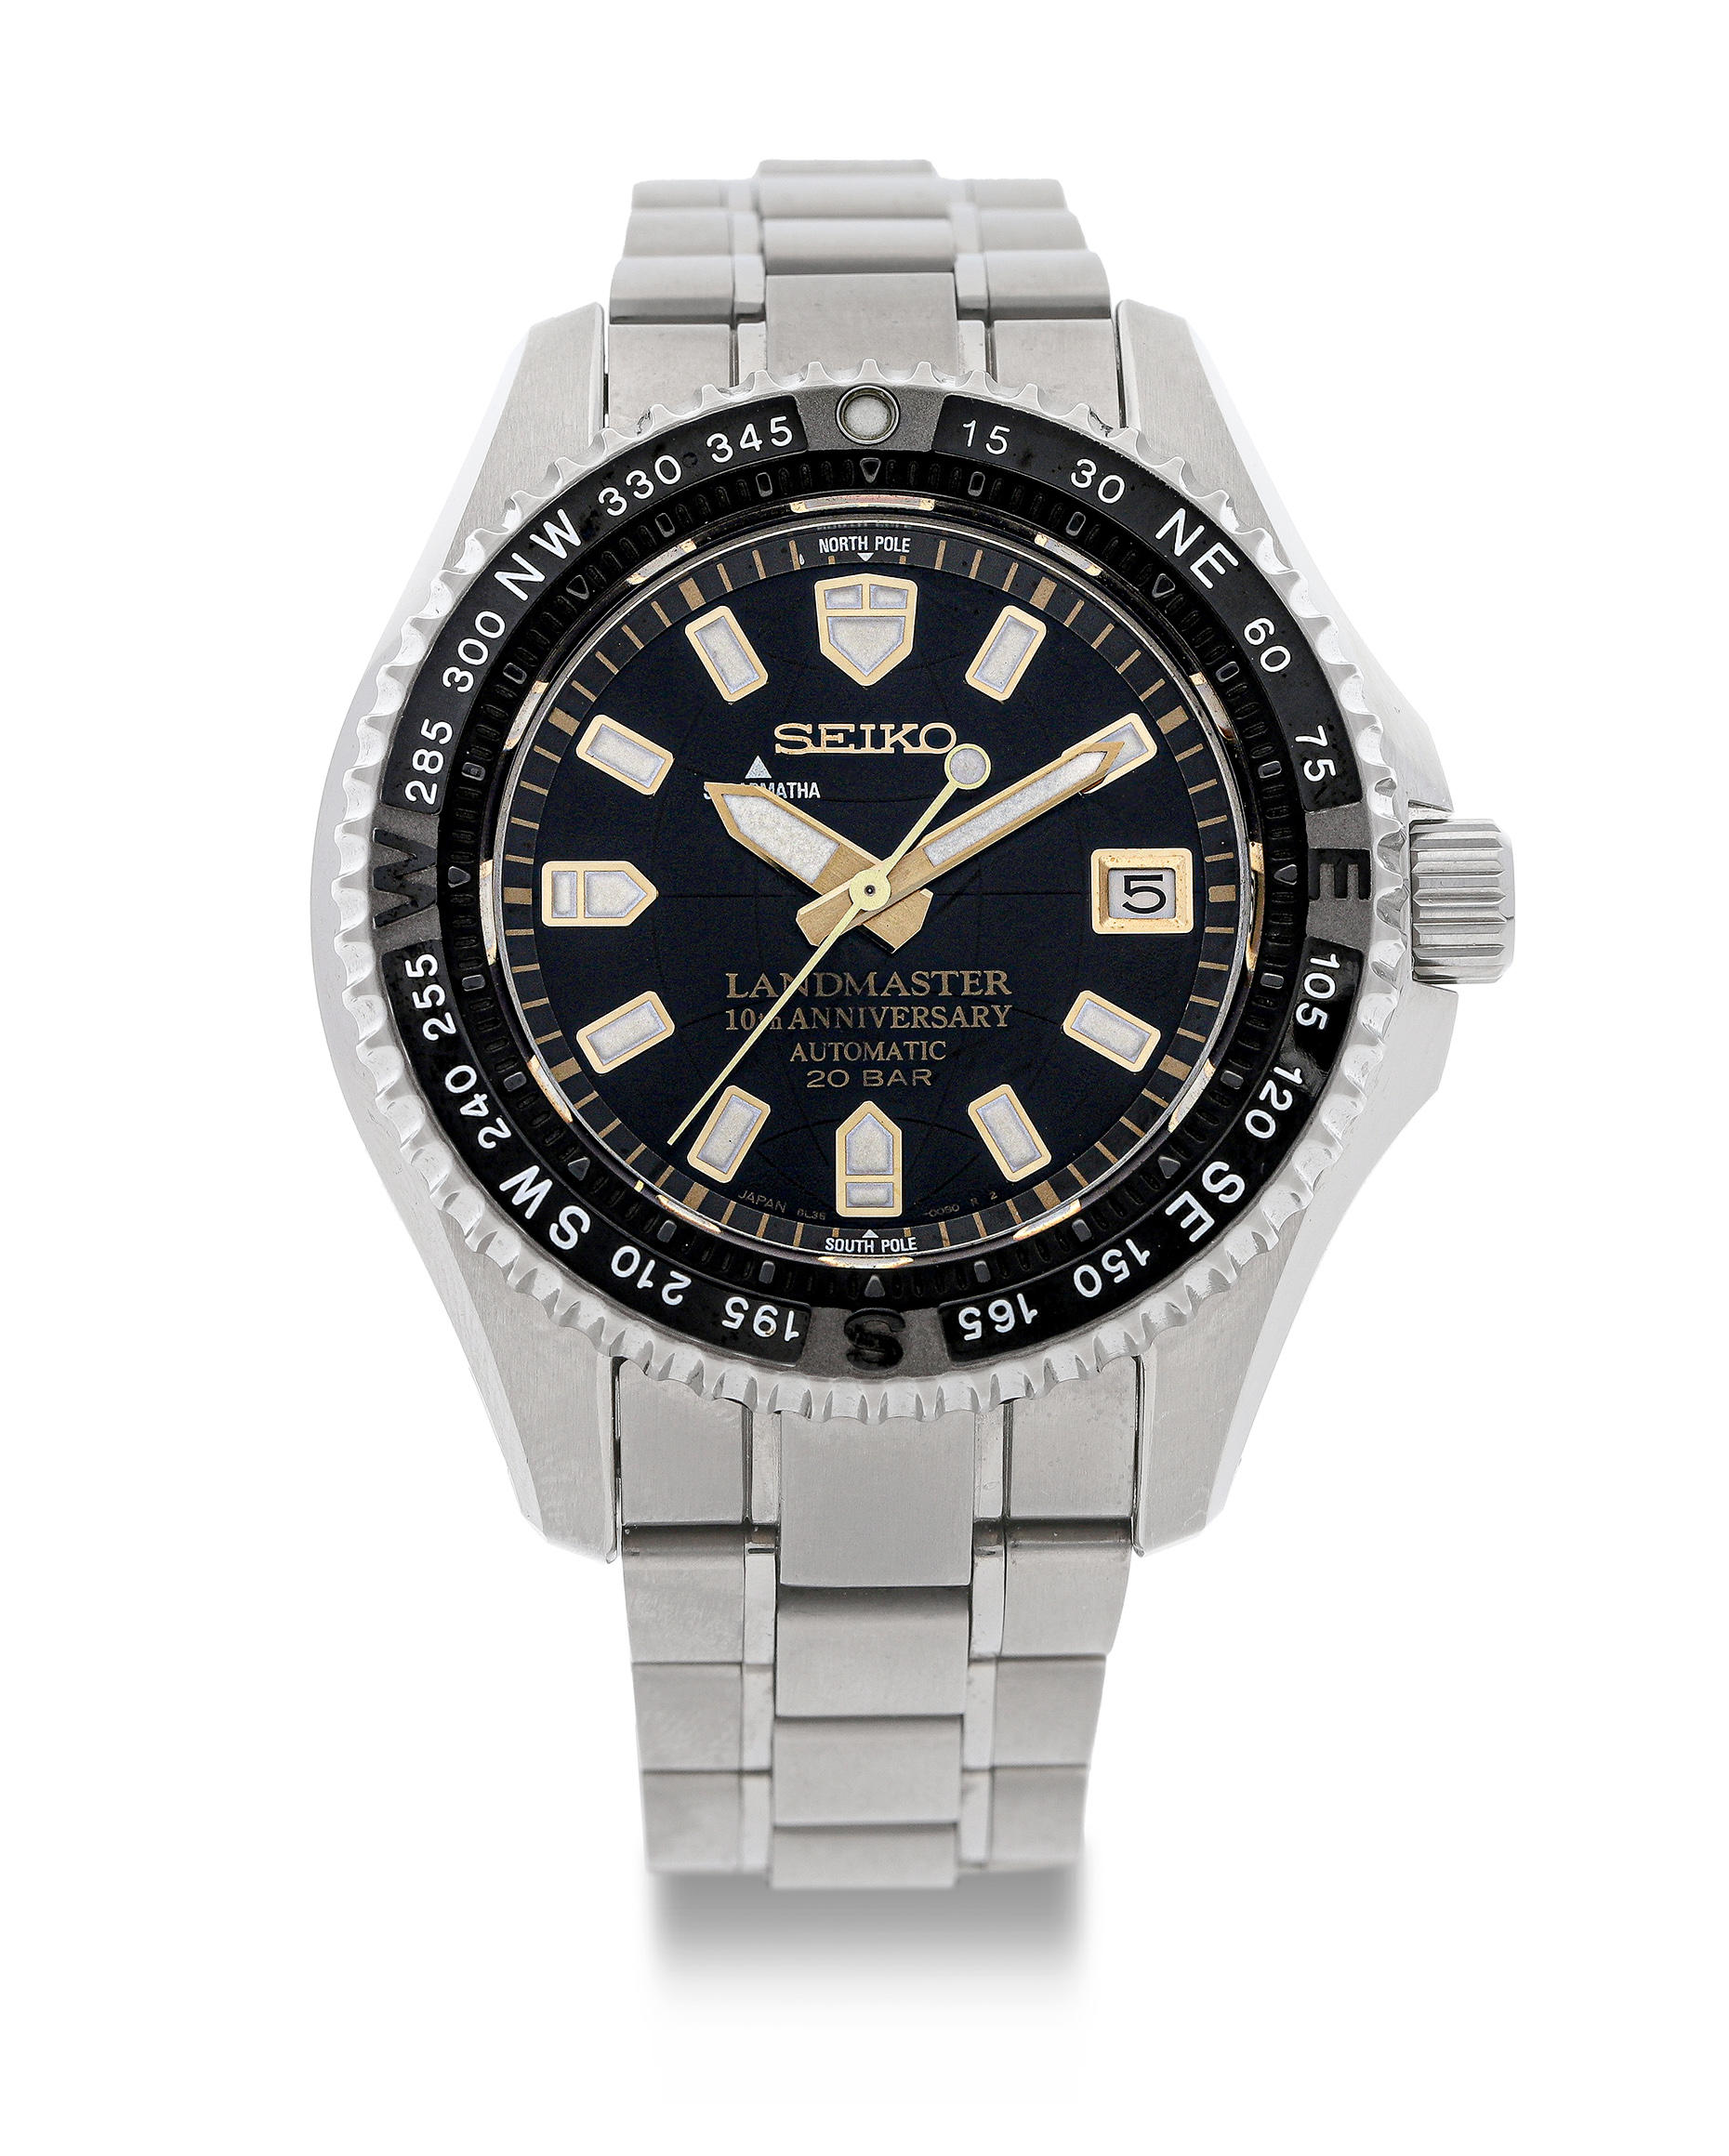 Bonhams : Seiko. A Titanium Automatic Calendar Bracelet Watch, Limited  Edition 'Landmaster 10th Anniversary', , /500, With  Guarantee and Box